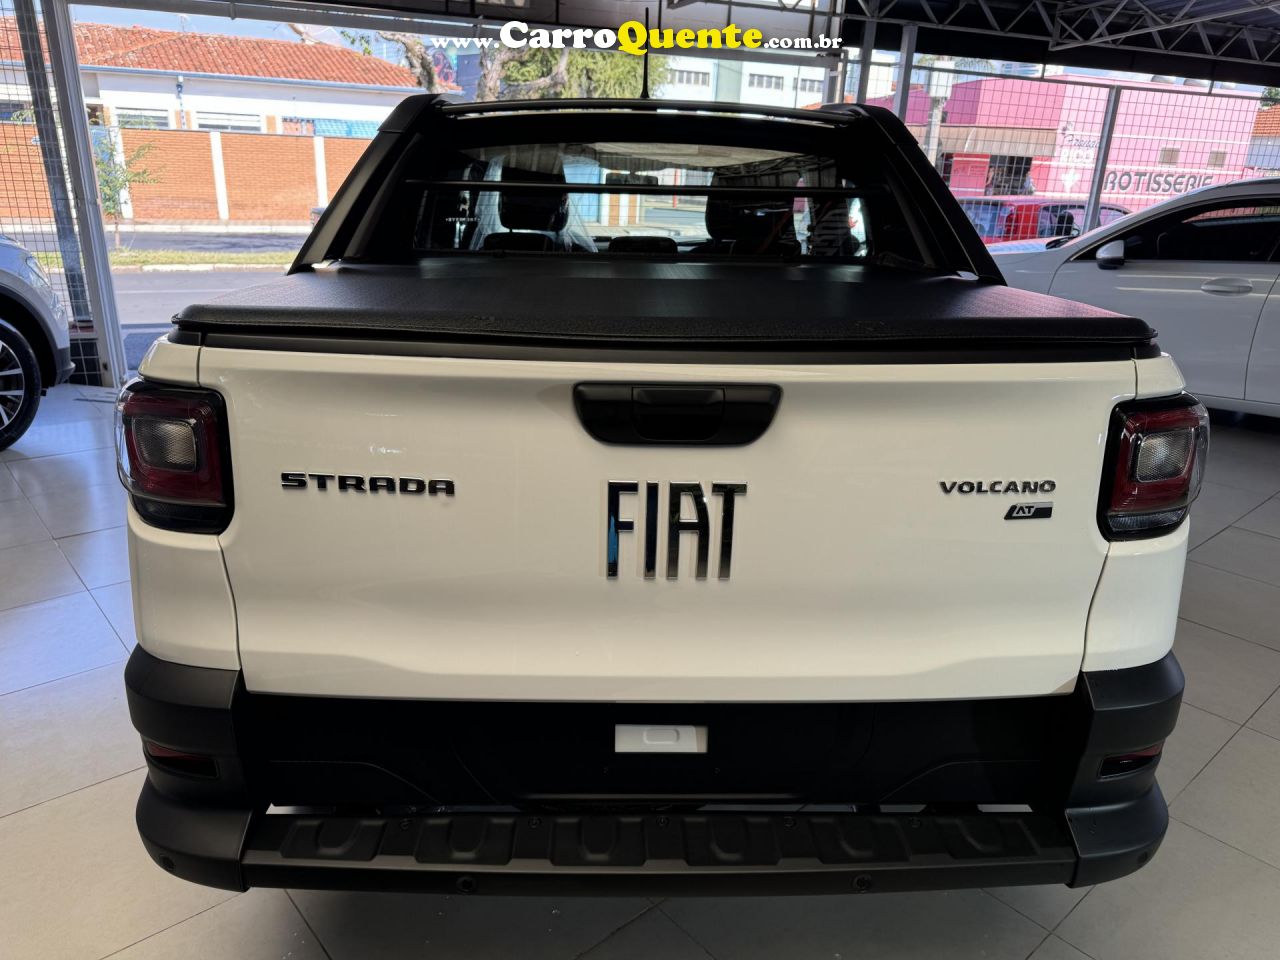 FIAT   STRADA VOLCANO 1.3 FLEX 8V CD AUT.   BRANCO 2025 1.3 FLEX - Loja